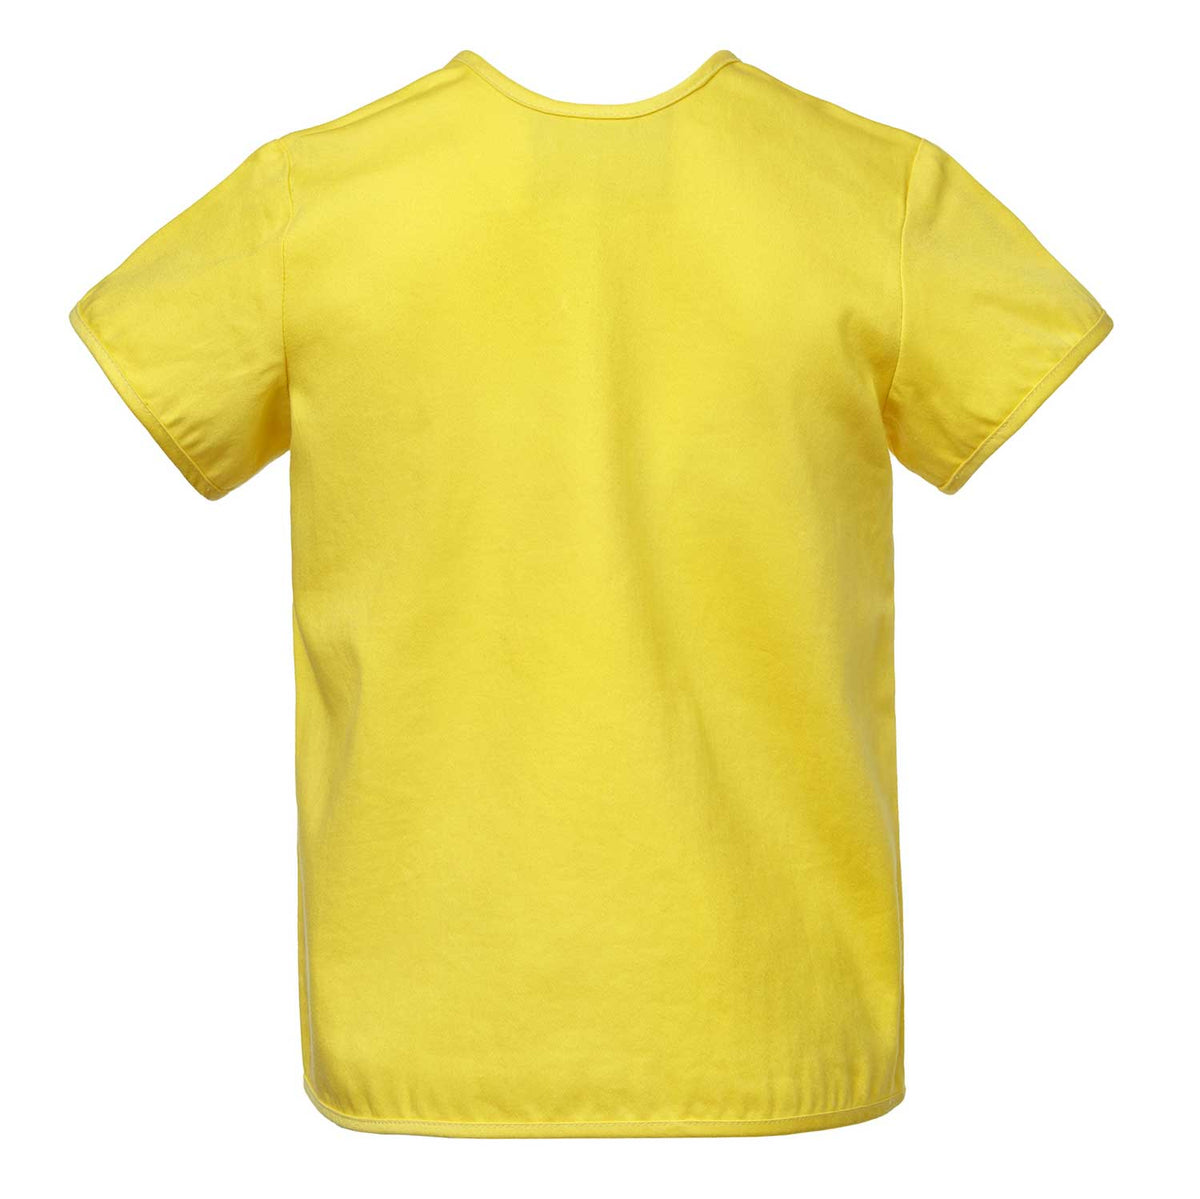 The Canopy T-Shirt - Infantium Victoria